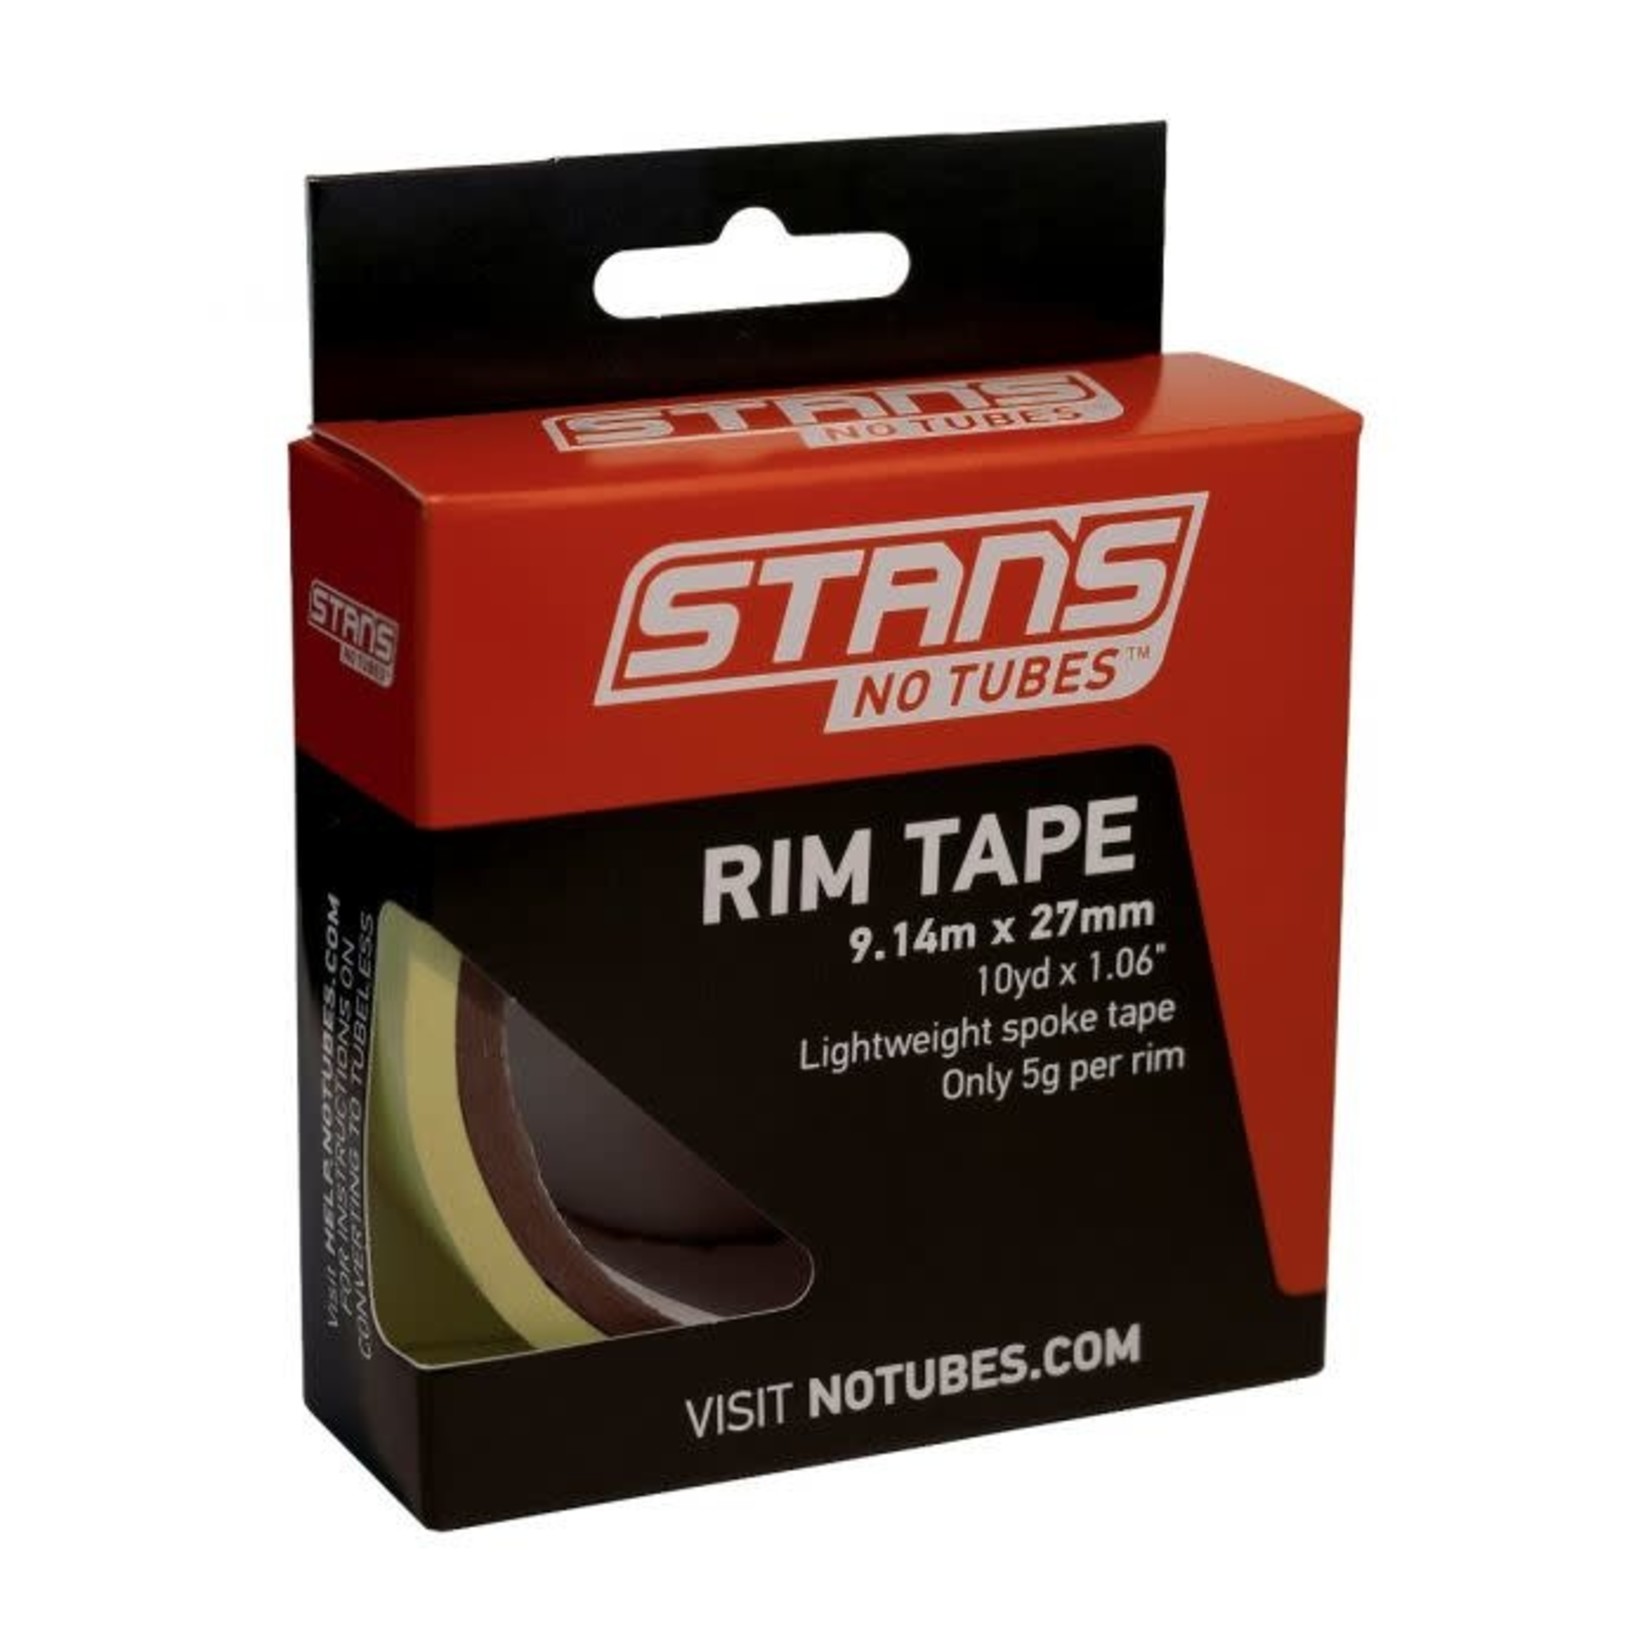 Stans No Tubes STAN'S No Tubes, Rim Tape Roll, 27mm x 9.14m